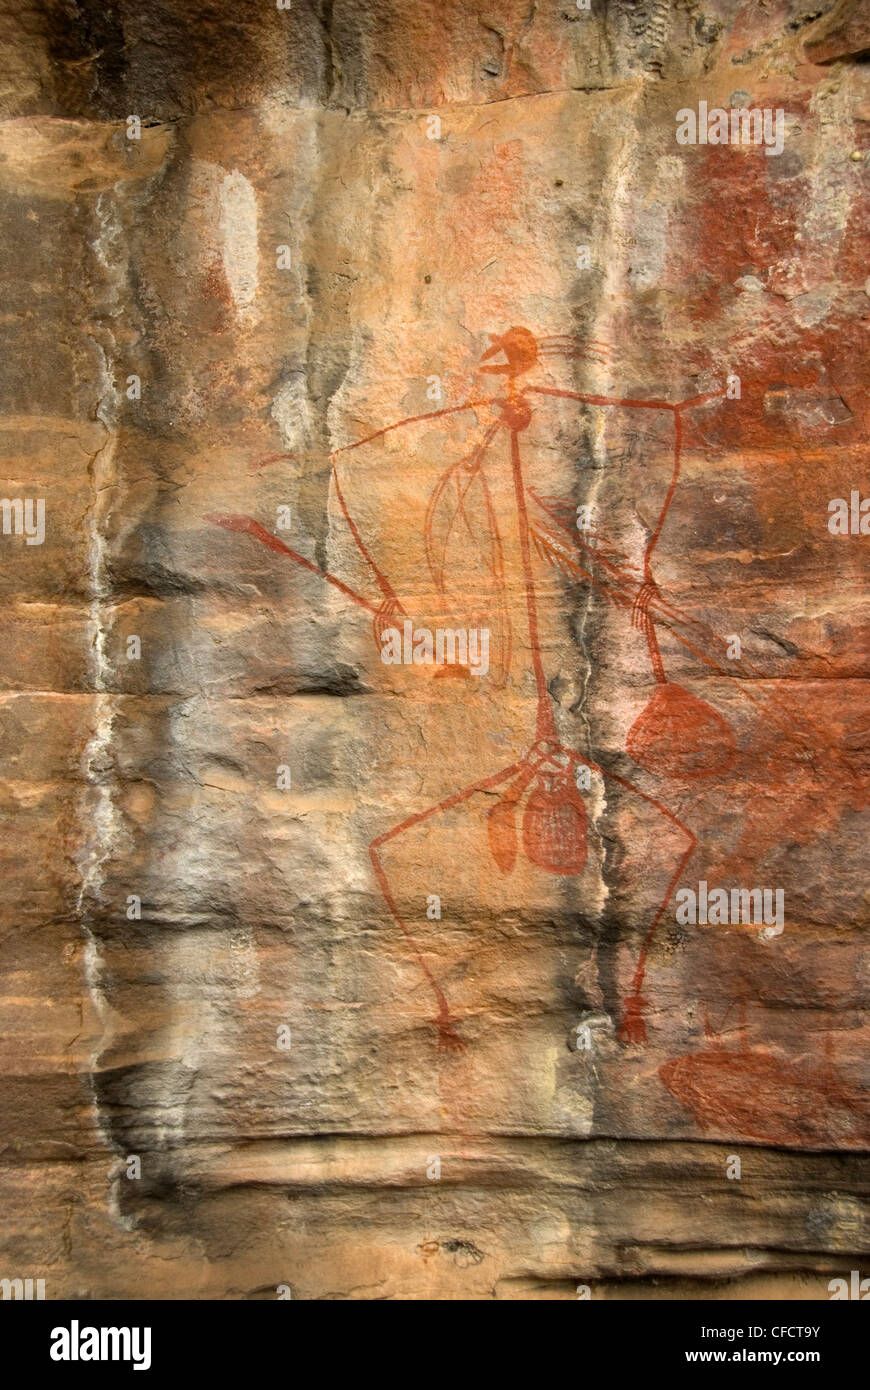 Aboriginal paintings in rock shelter in quartzite cliff, Ubirr Rocks, Kakadu National Park, Northern Territory, Australia Stock Photo